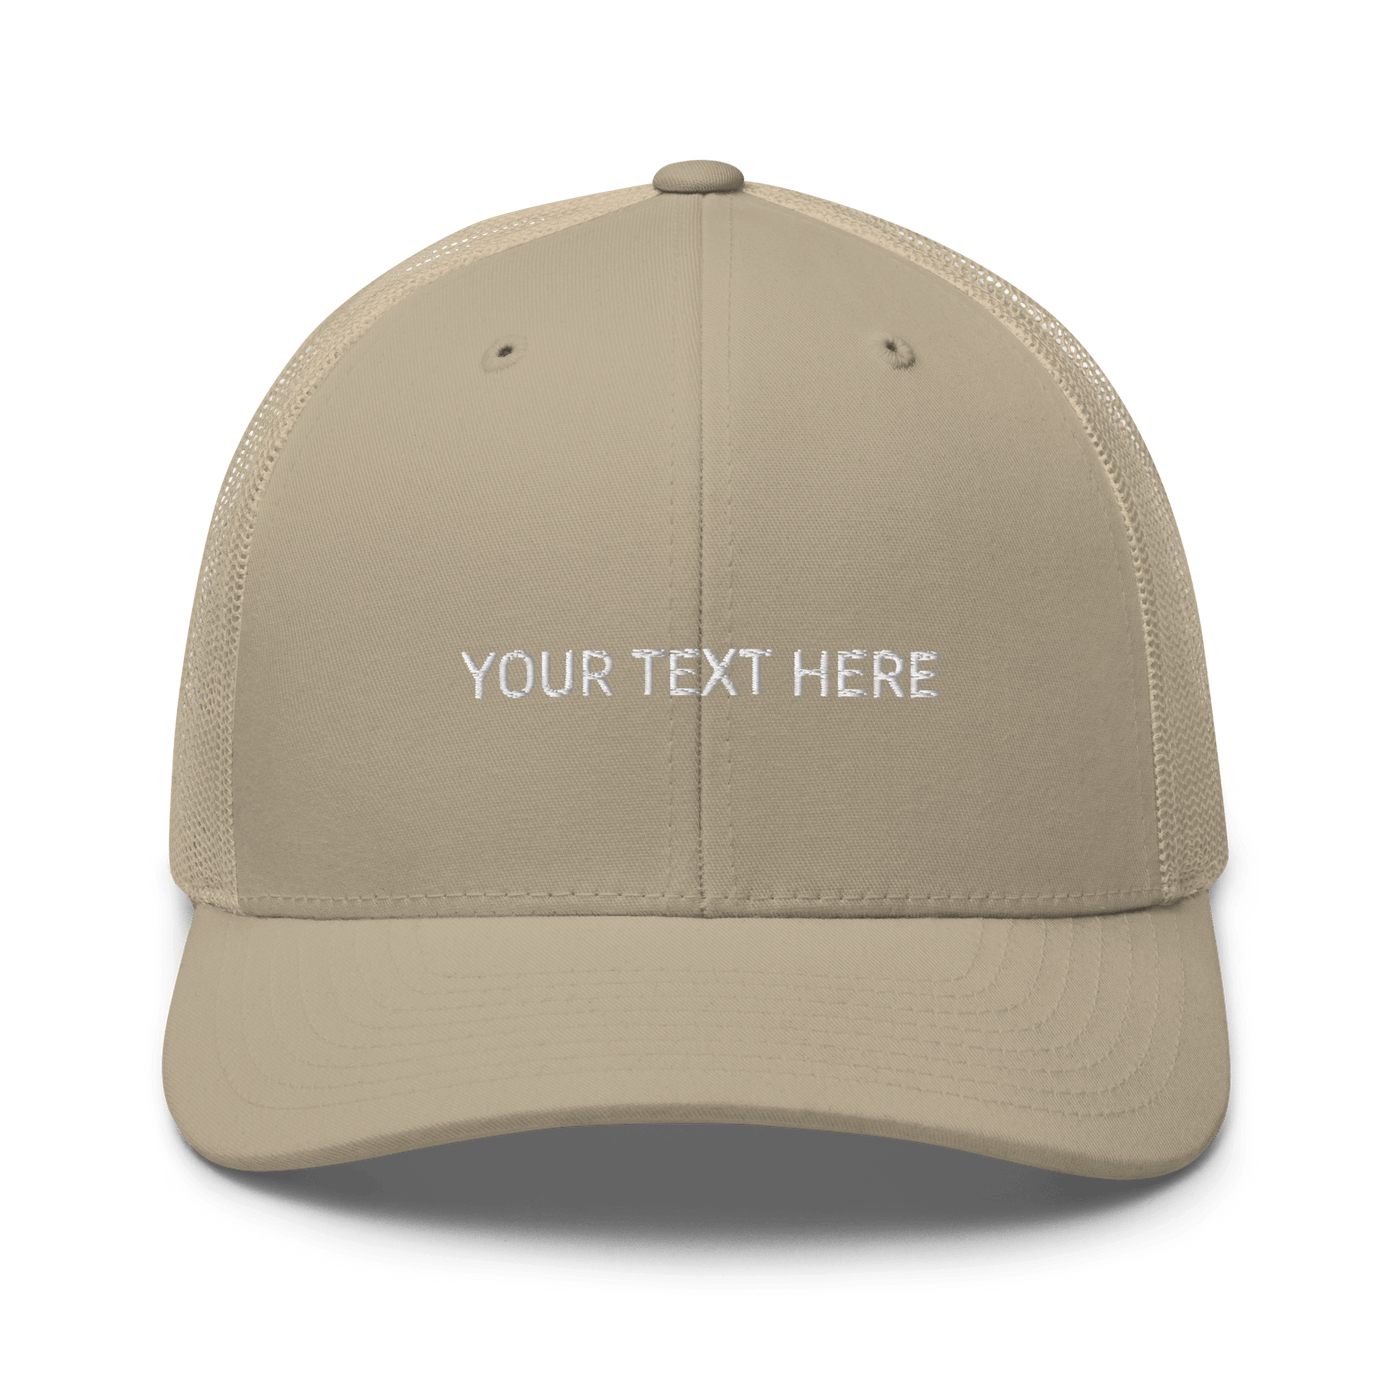 Customize your own Trucker Cap - Khaki - - Just Another Cap Store